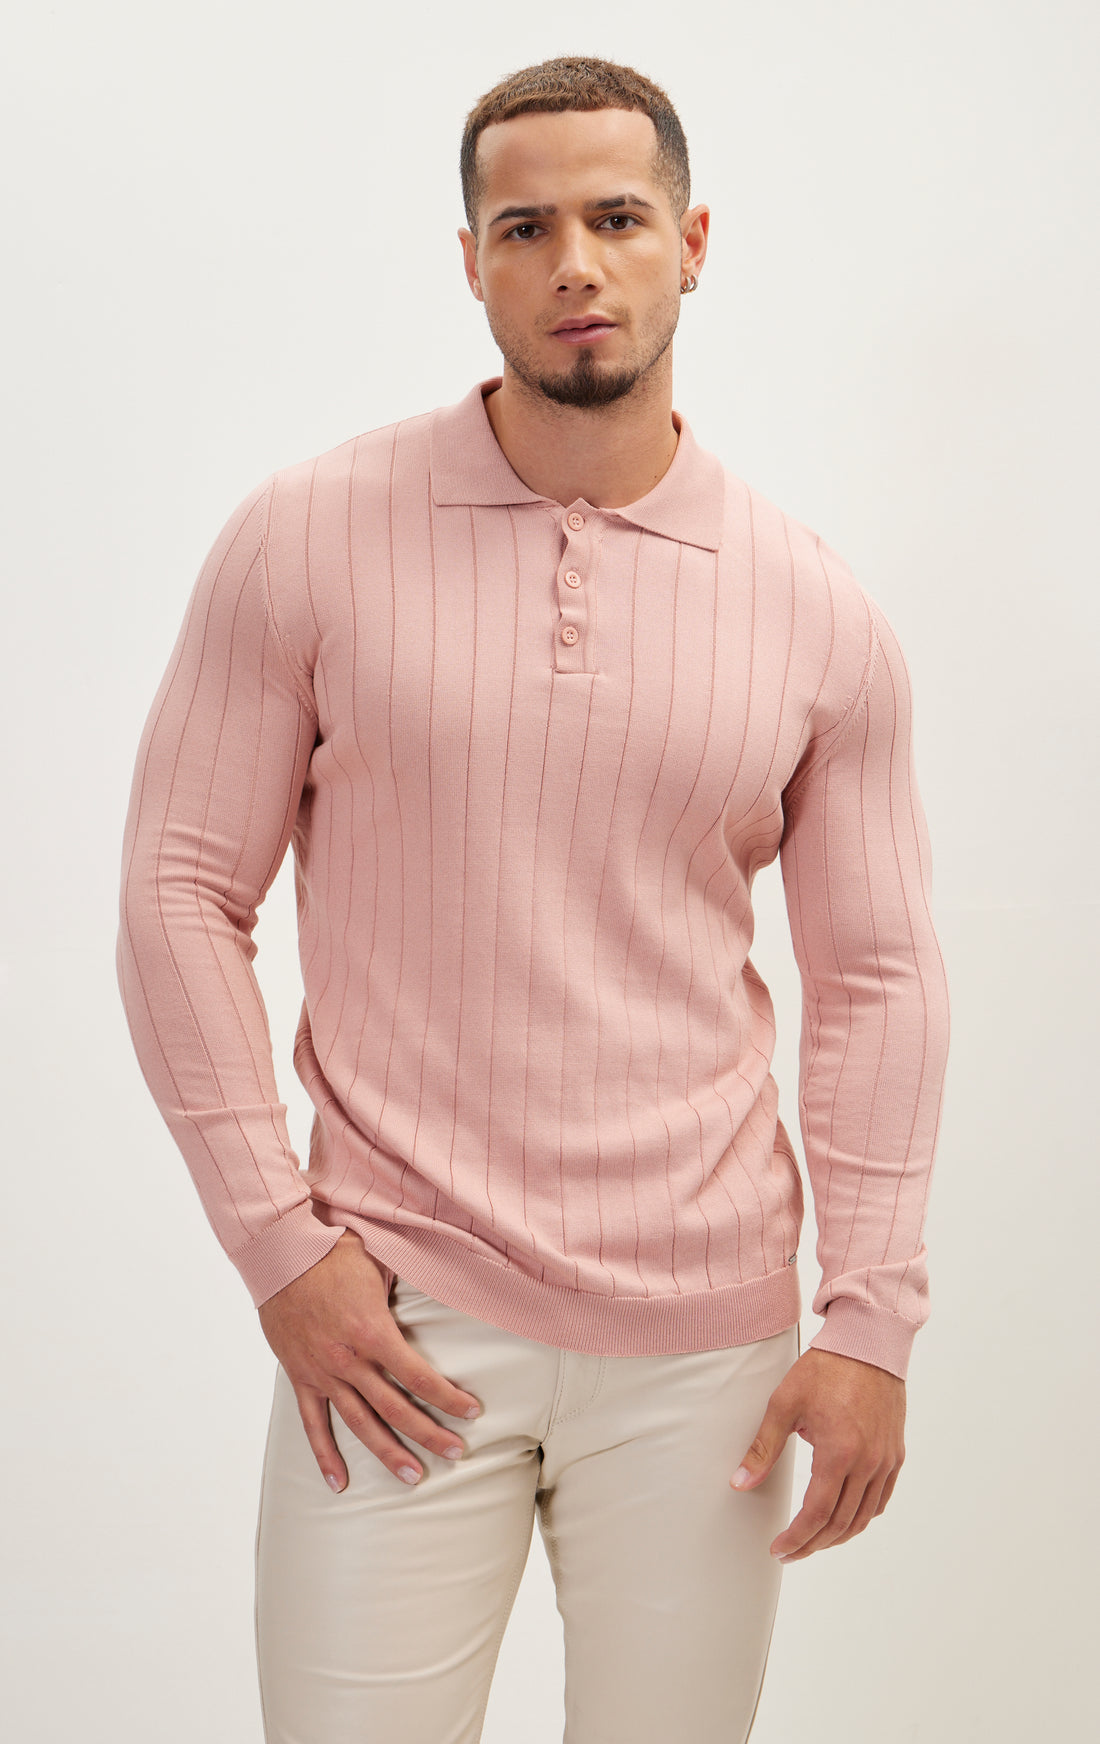 Slip-Stitch Polo Neck Long Sleeve Sweater - Rose